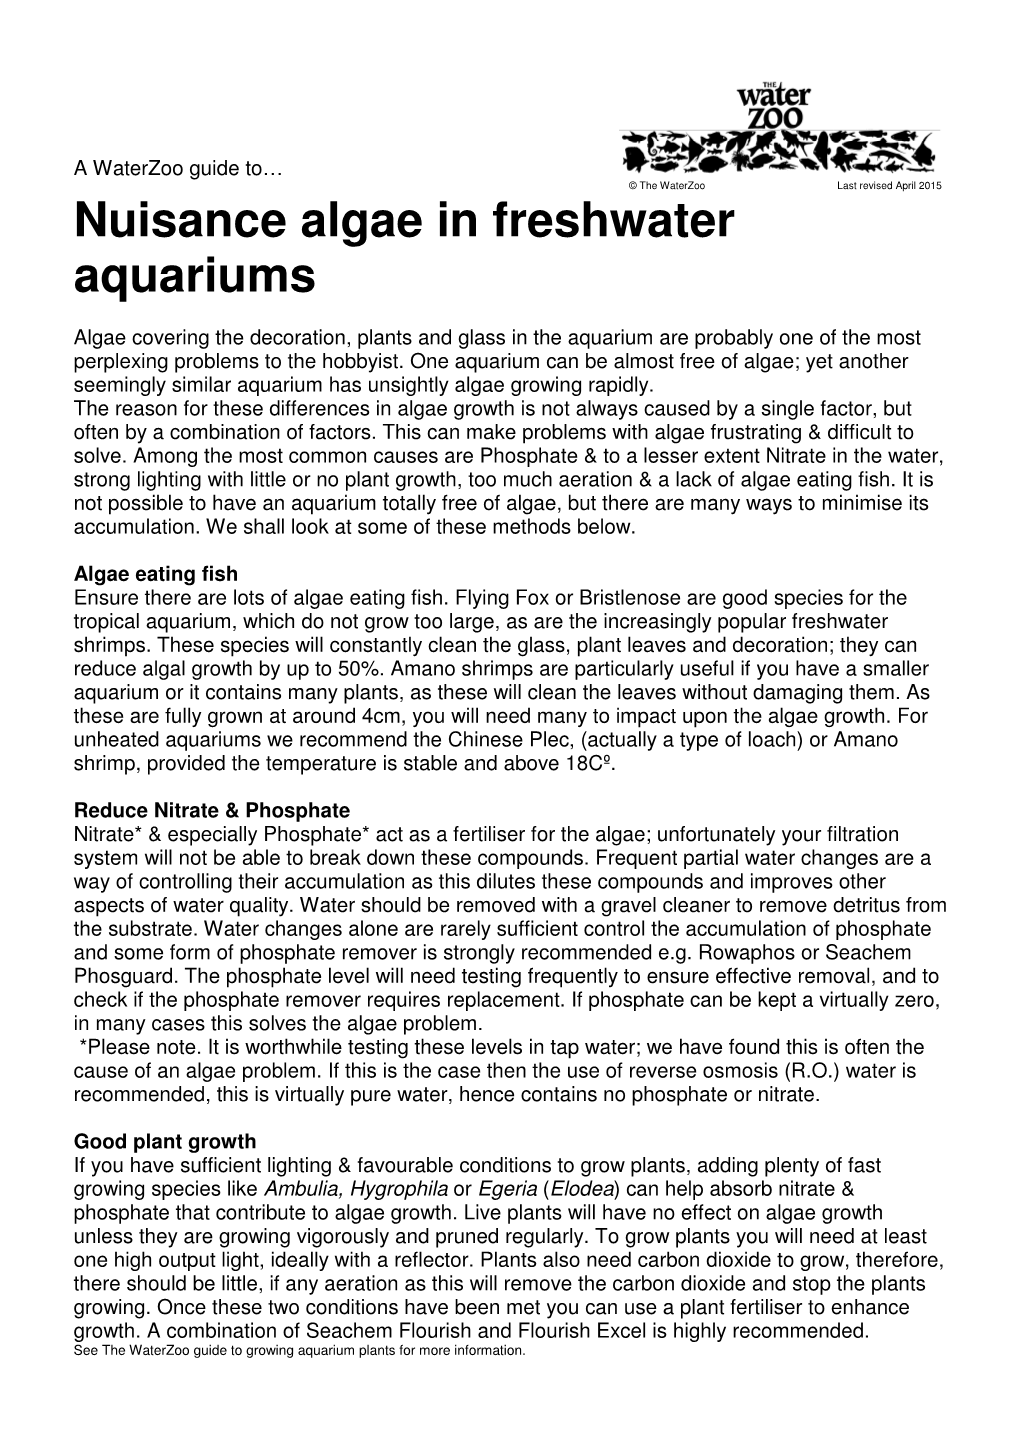 Nuisance Algae in Freshwater Aquariums